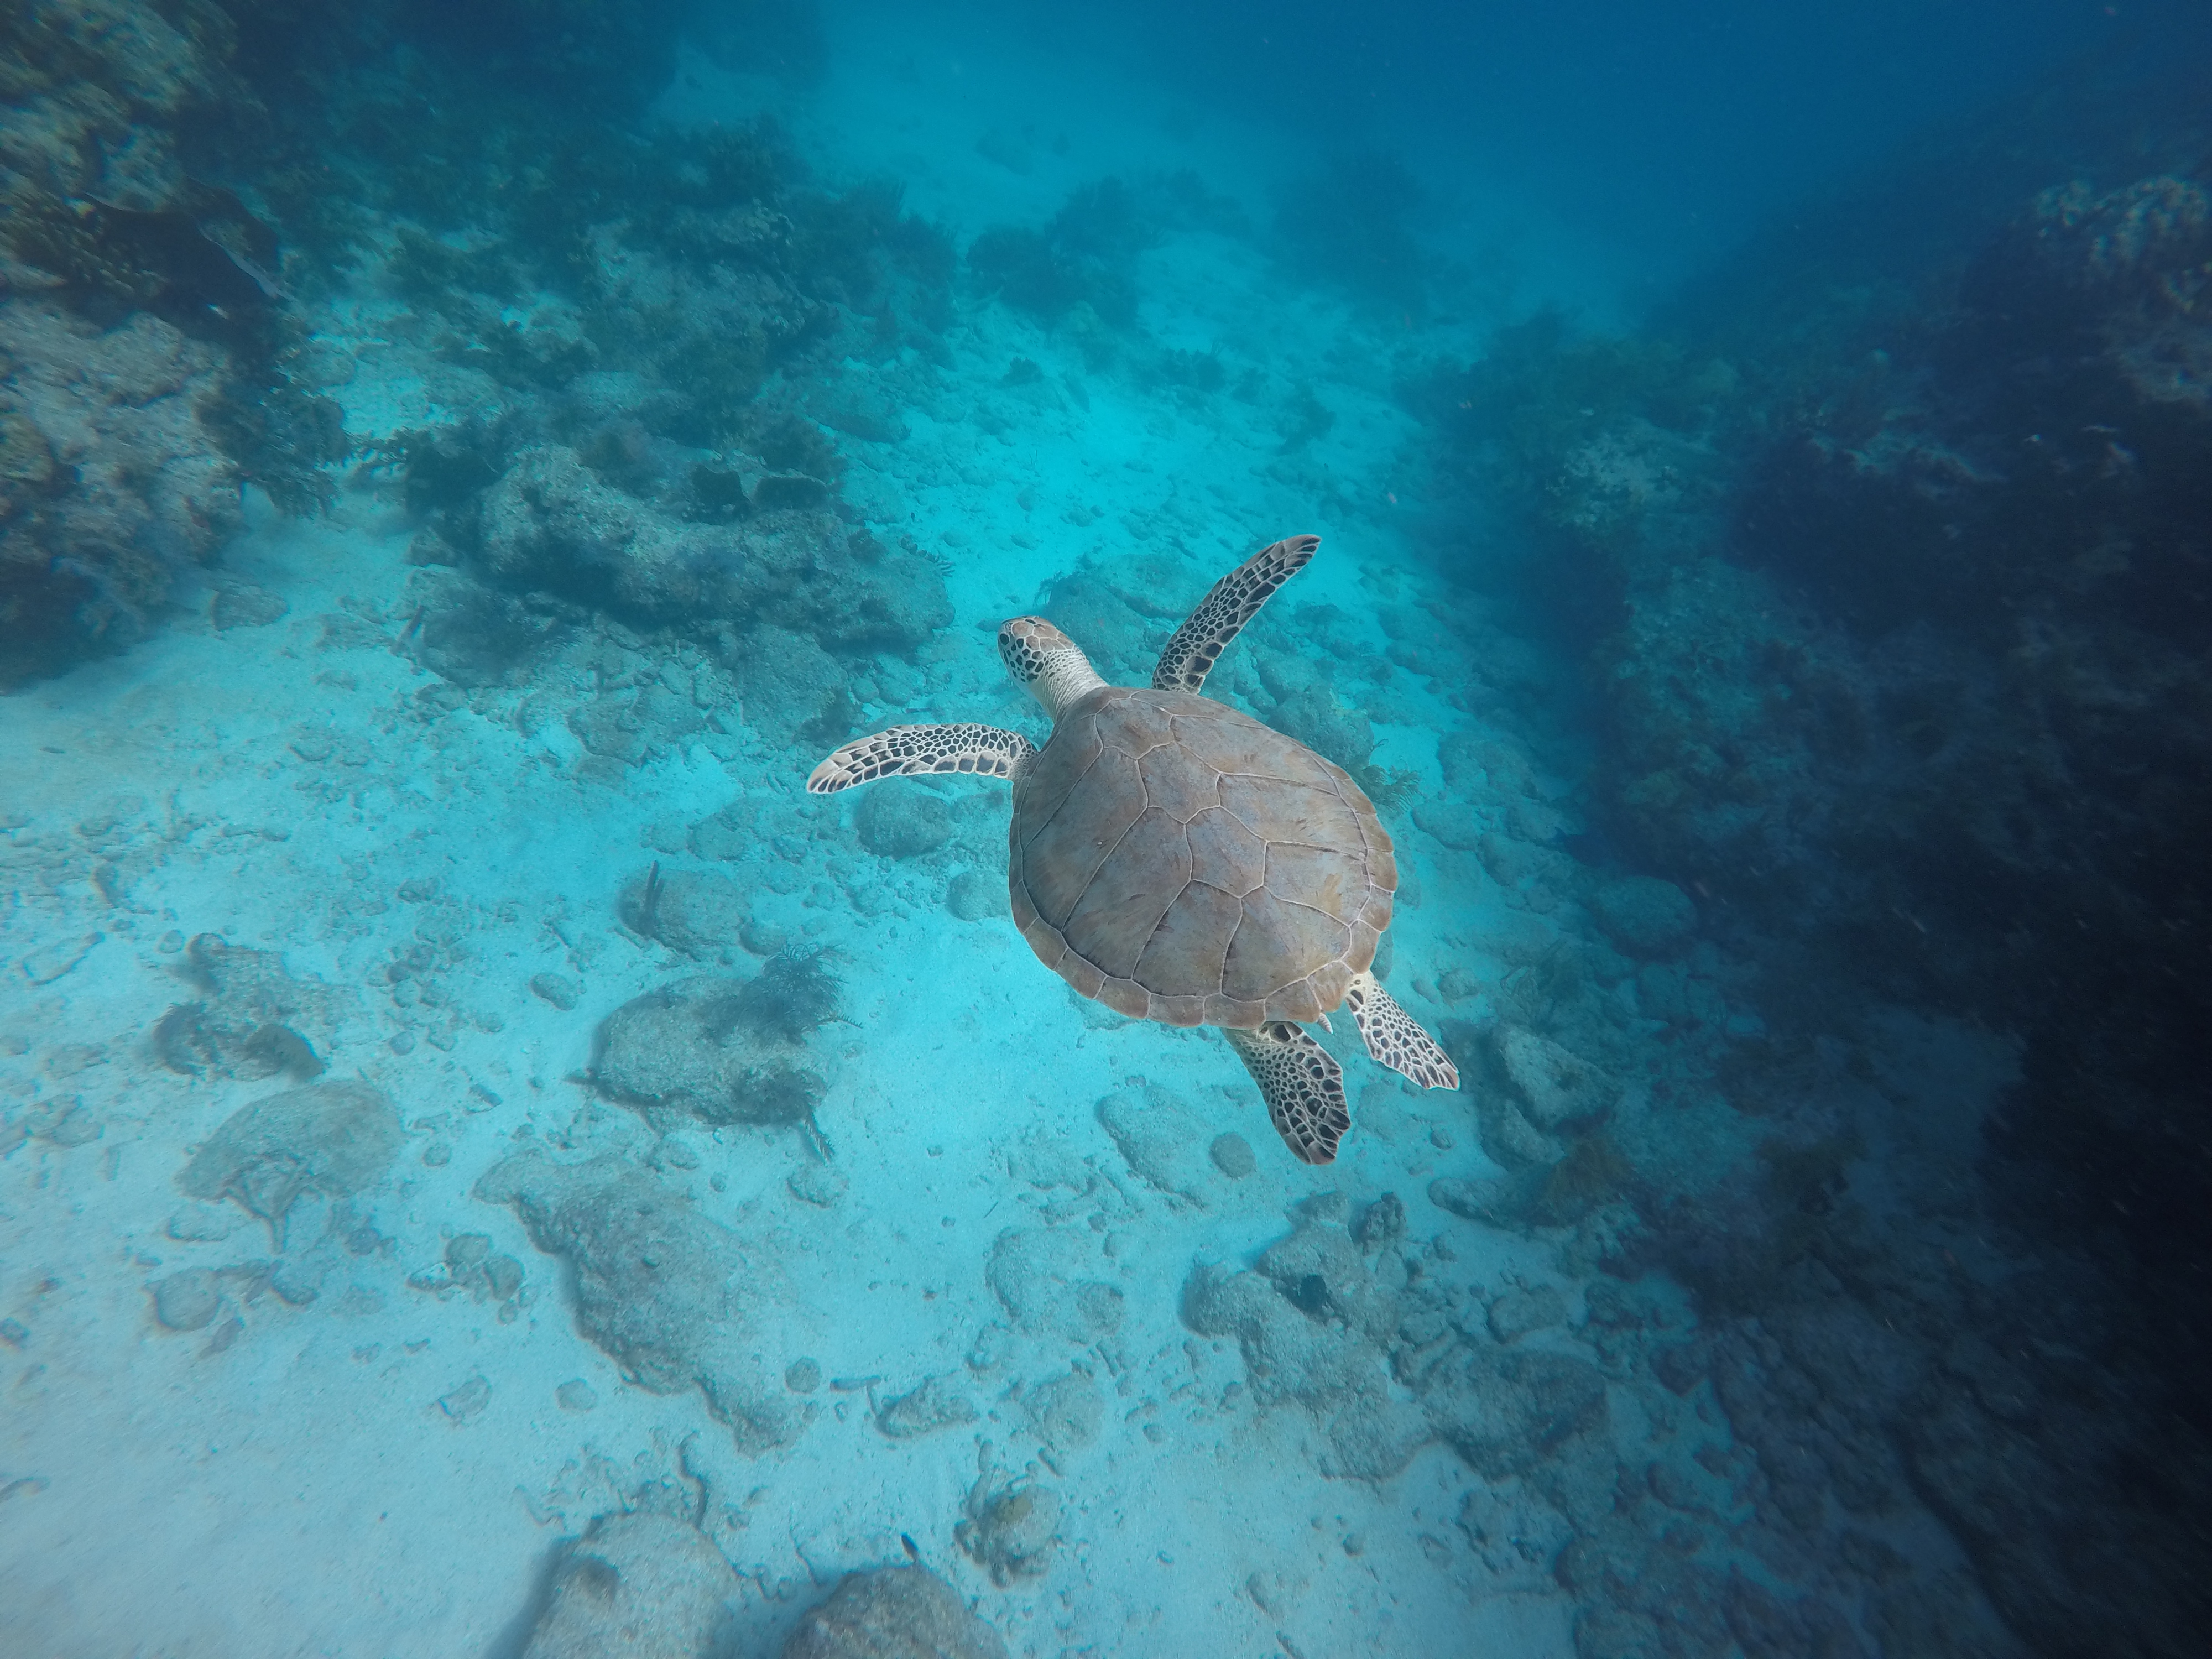 A sea turtle cruises through a reef.